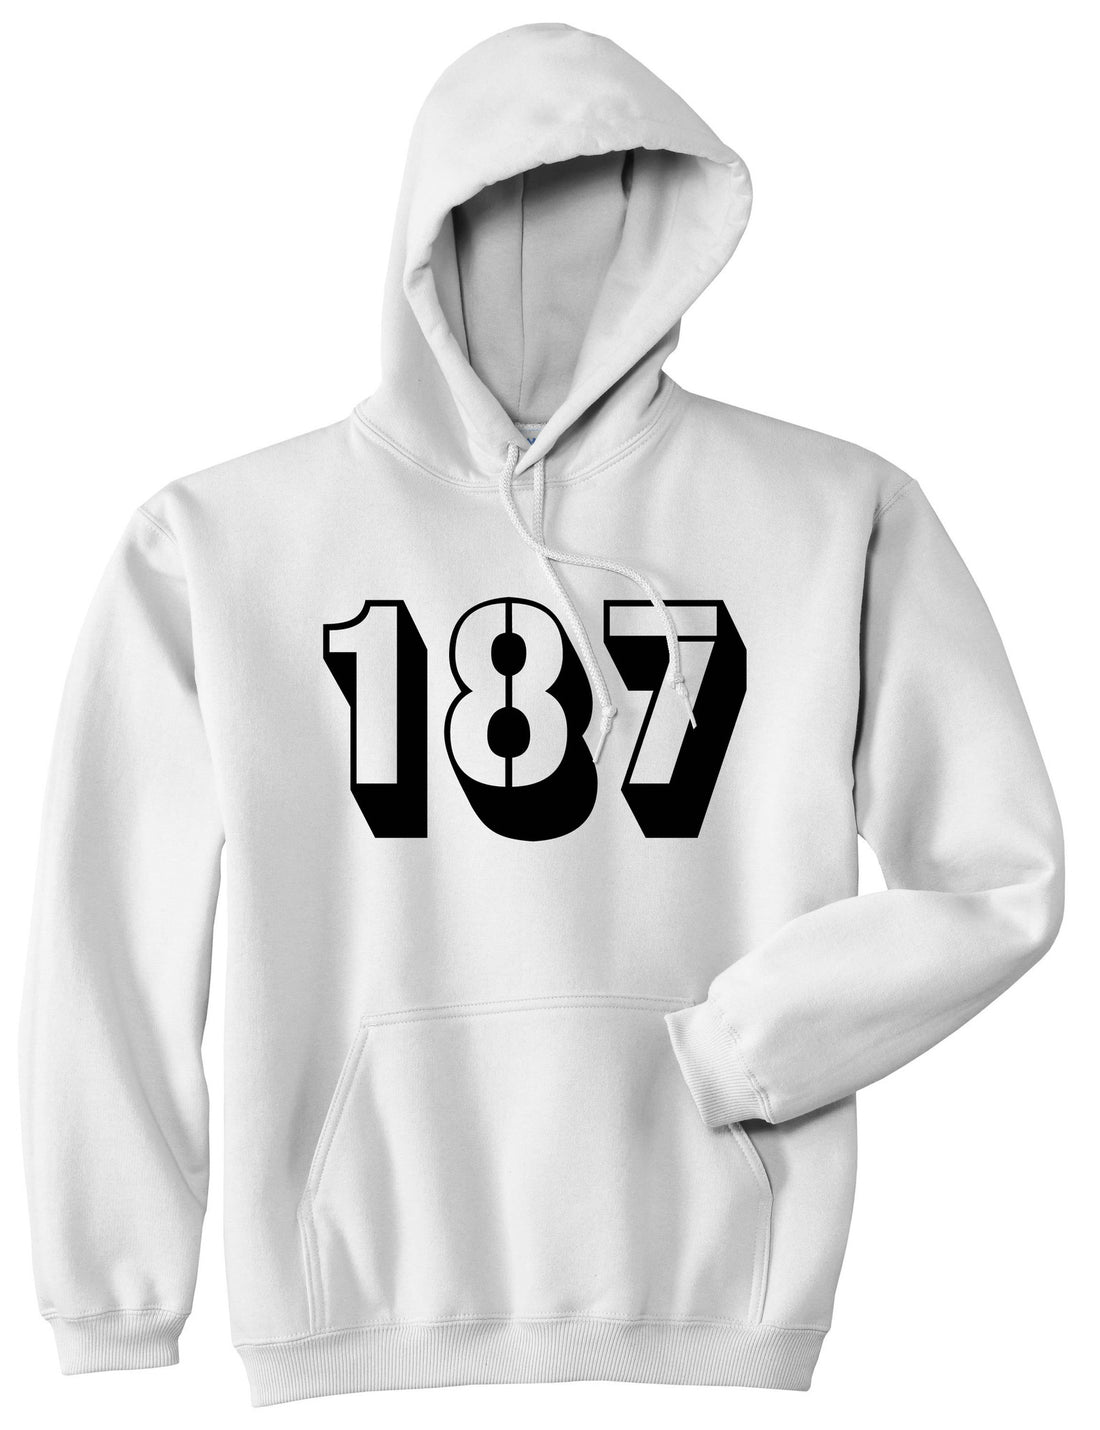 187 Pullover Hoodie Hoody in White by Kings Of NY